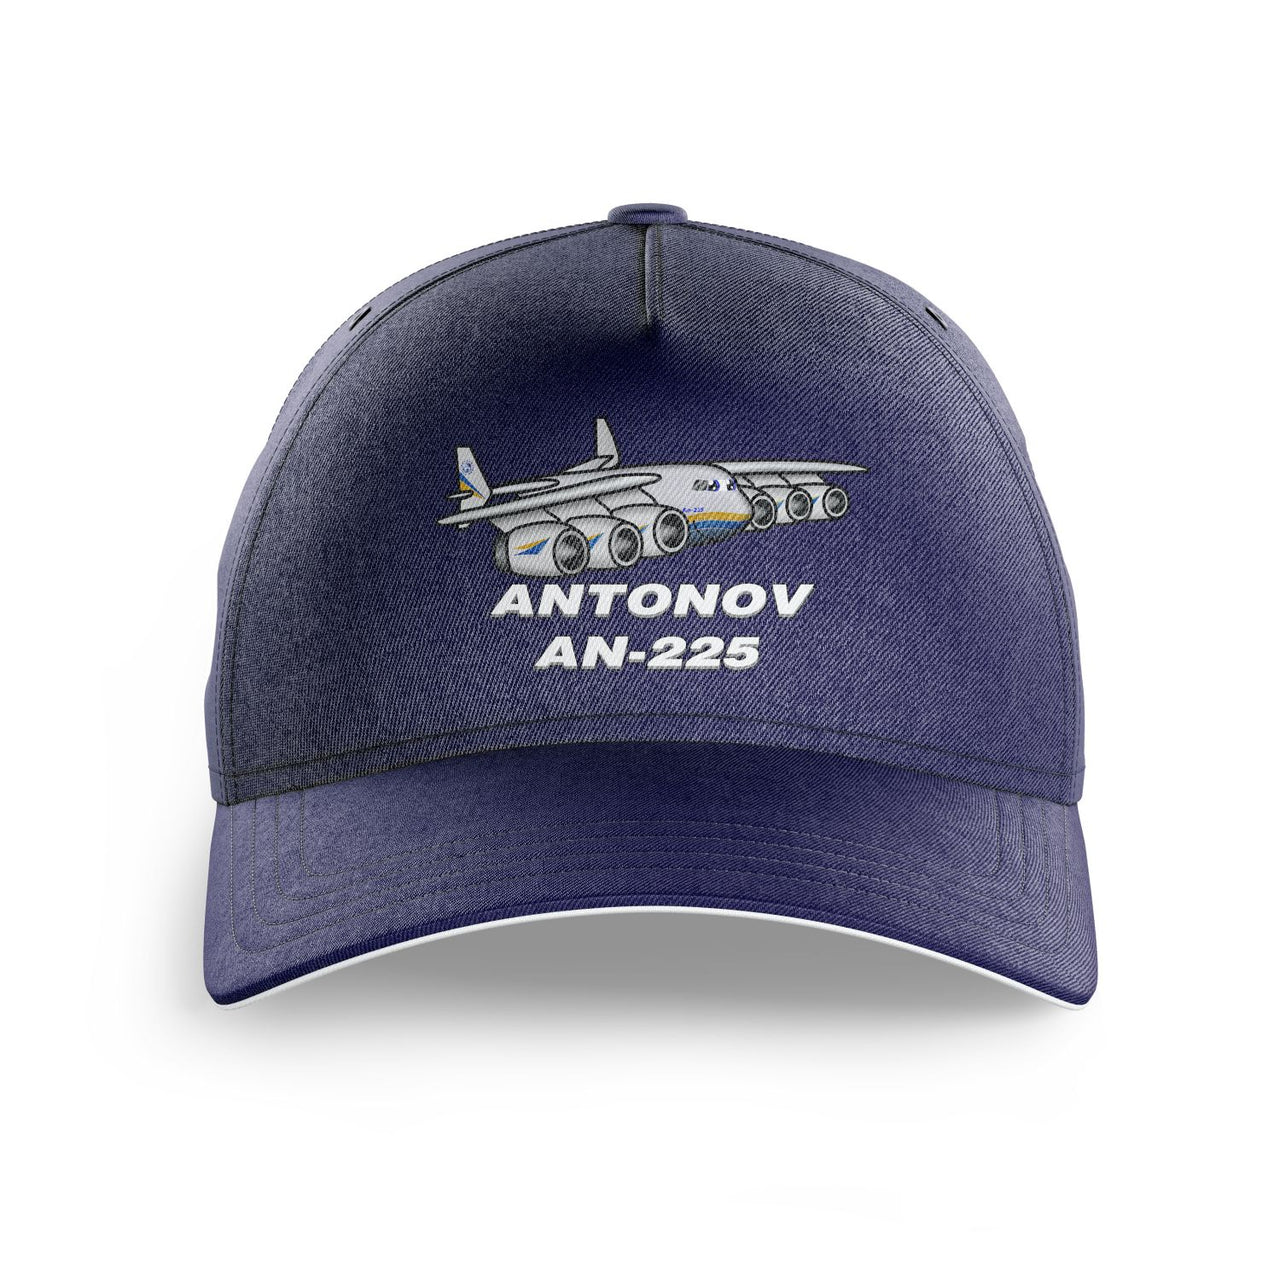 Antonov AN-225 (25) Printed Hats